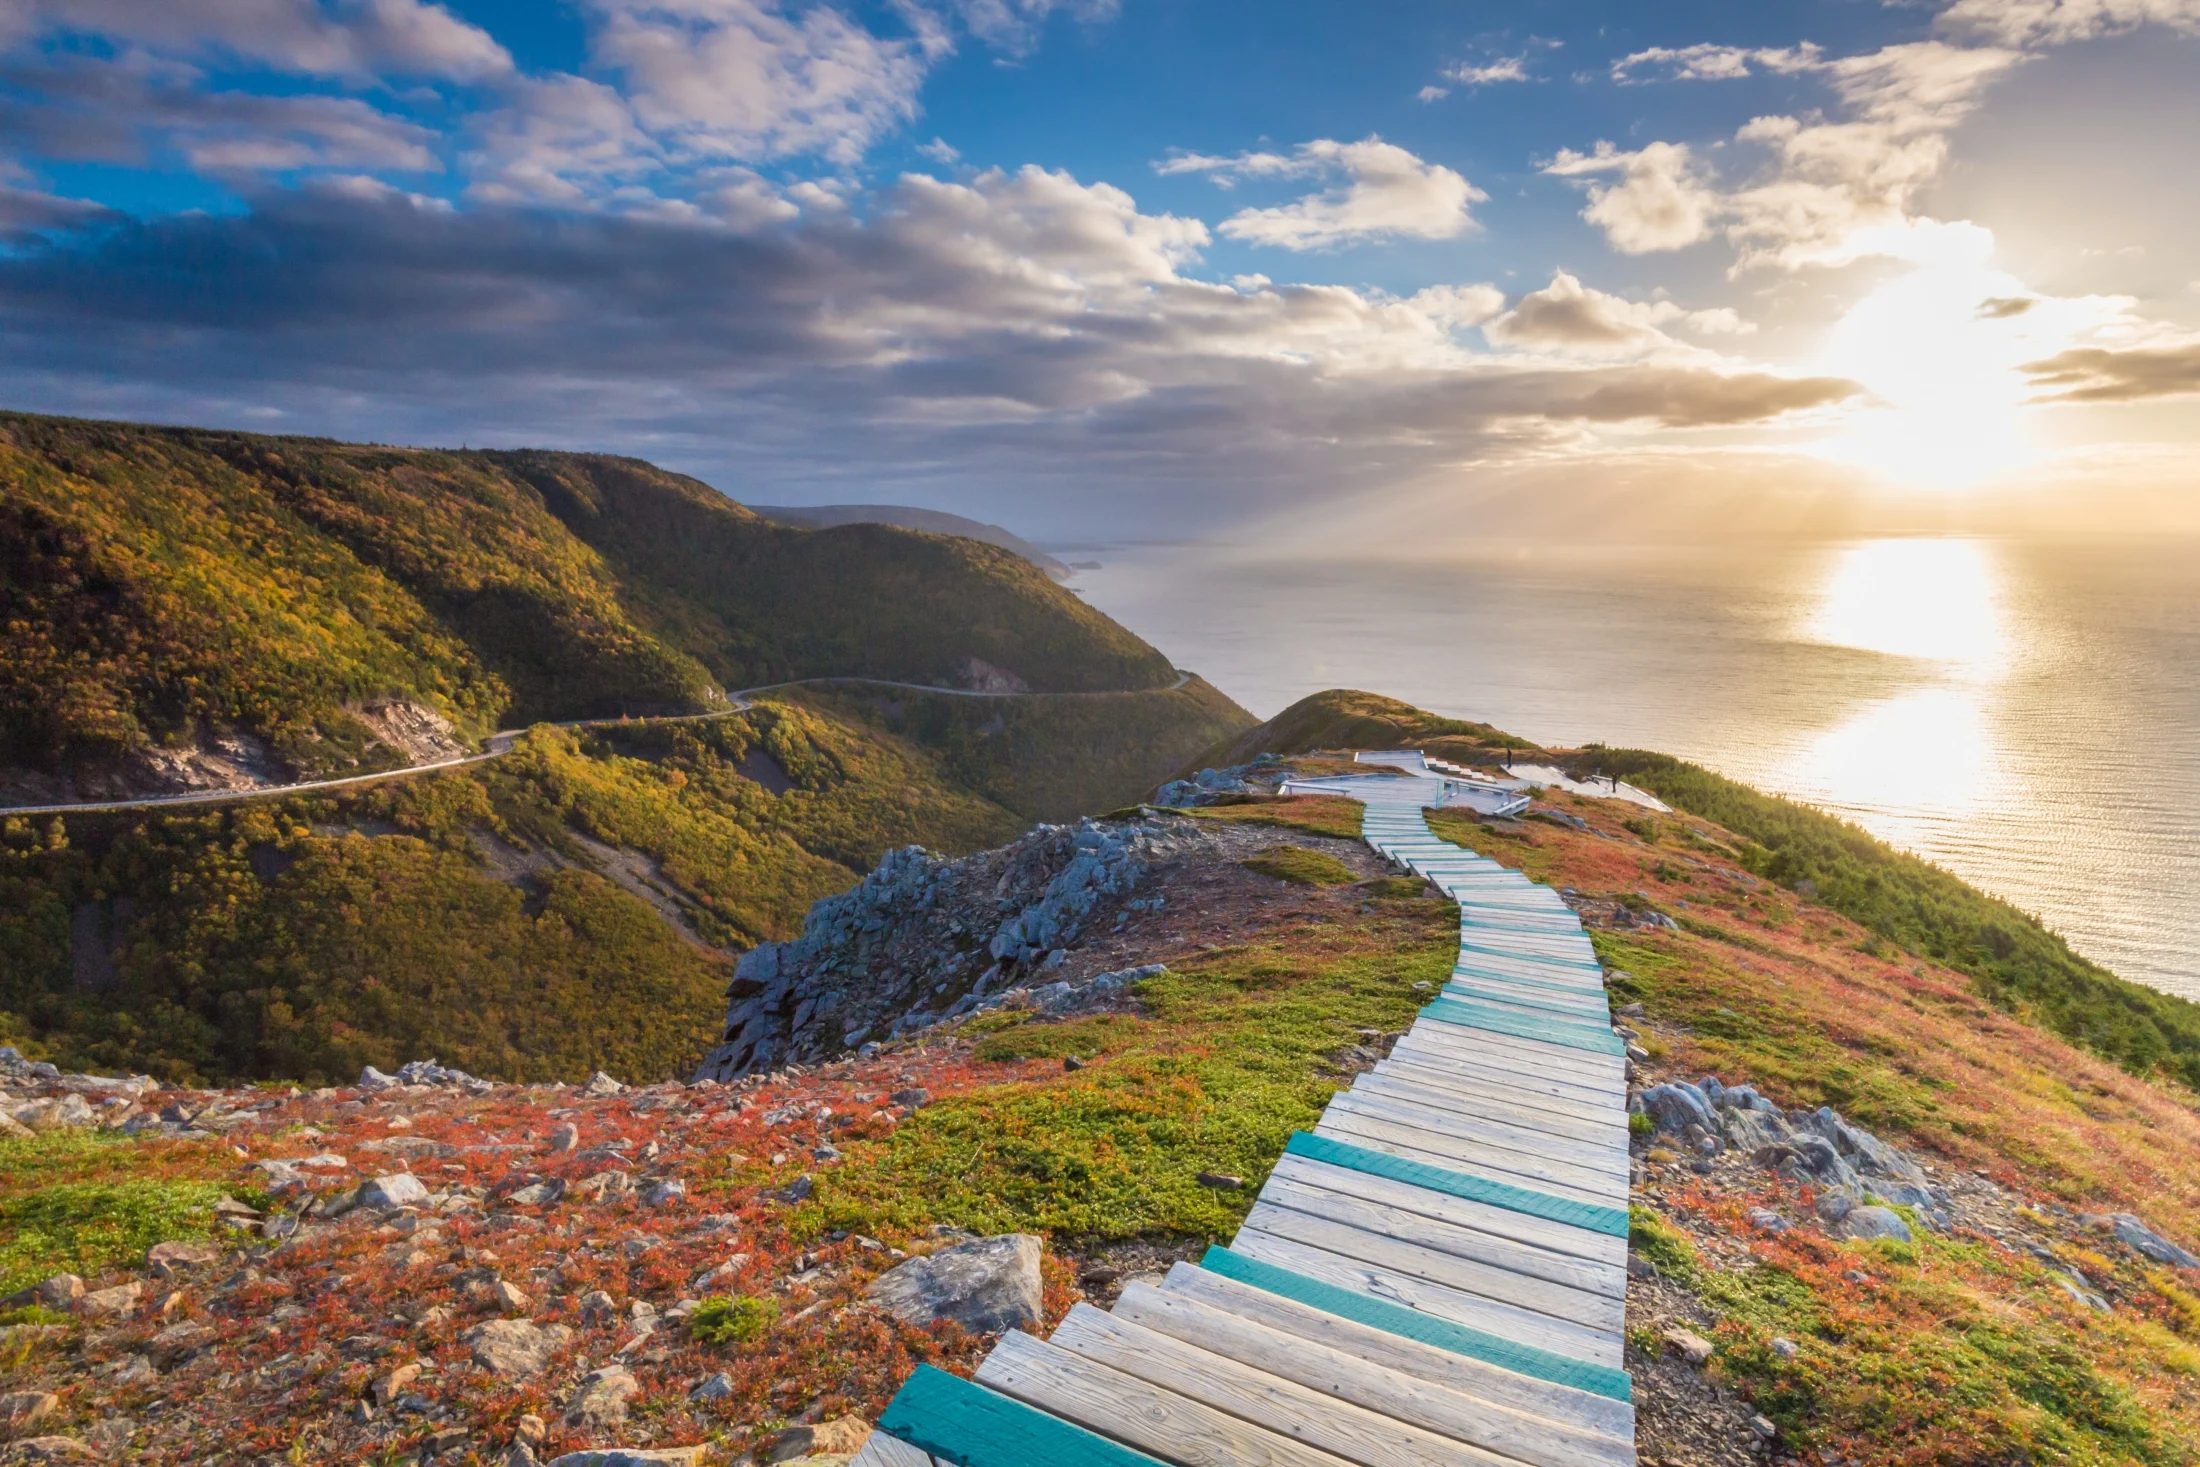 Nova Scotia amd the national parks system plan